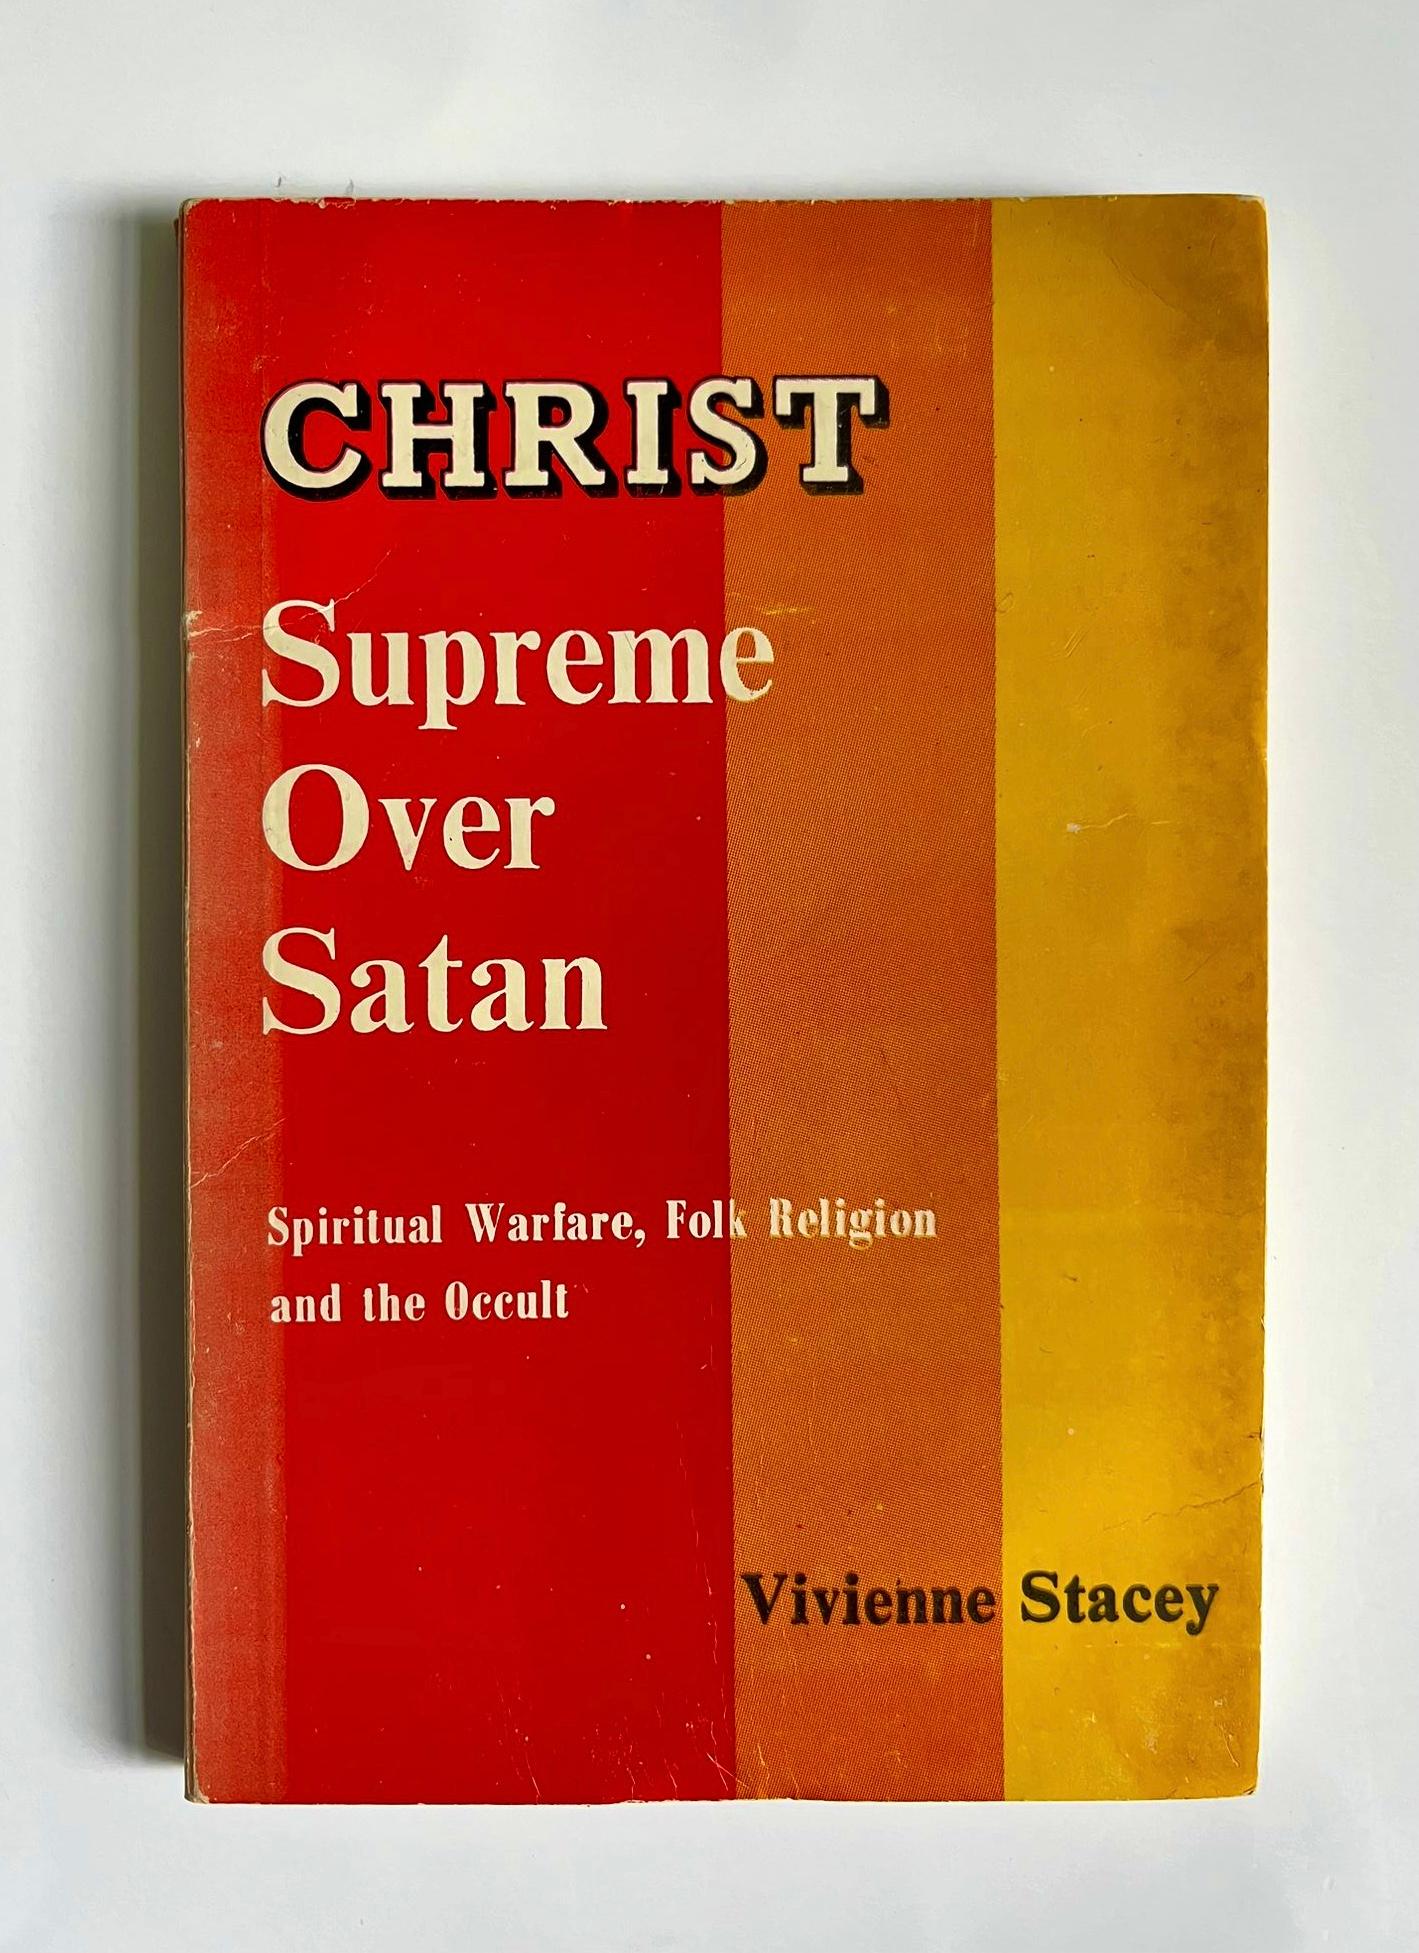 Christ Supreme Over Satan: Spiritual Warfare, Folk Religion & the Occult by Vivienne Stacey